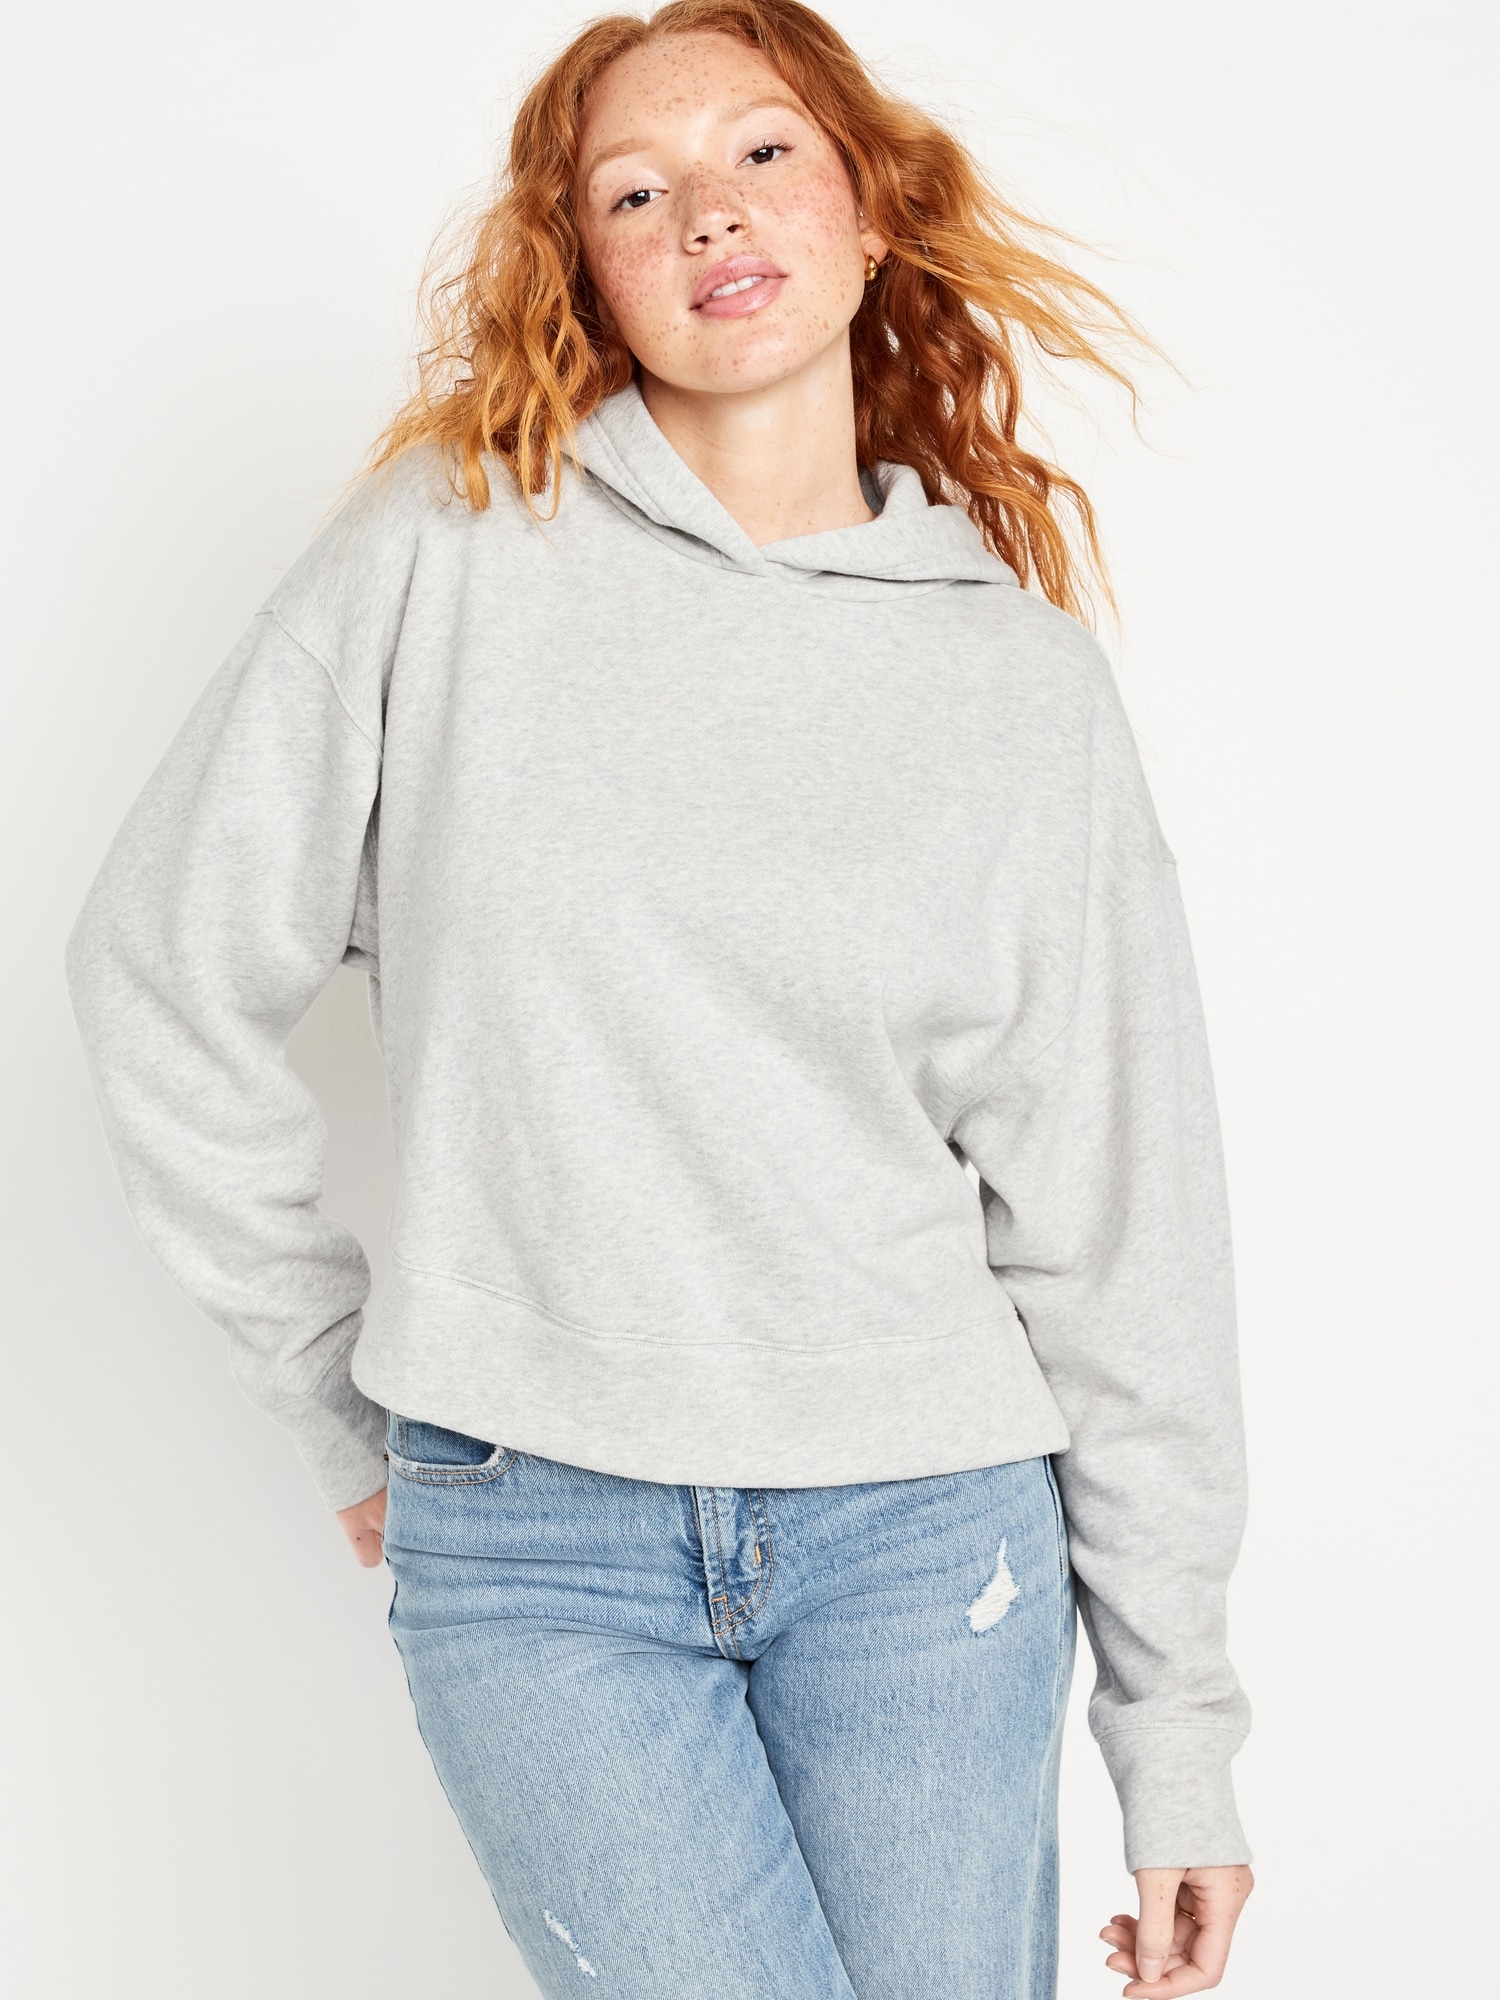 Women's Sweaters, Hoodies & Pullovers